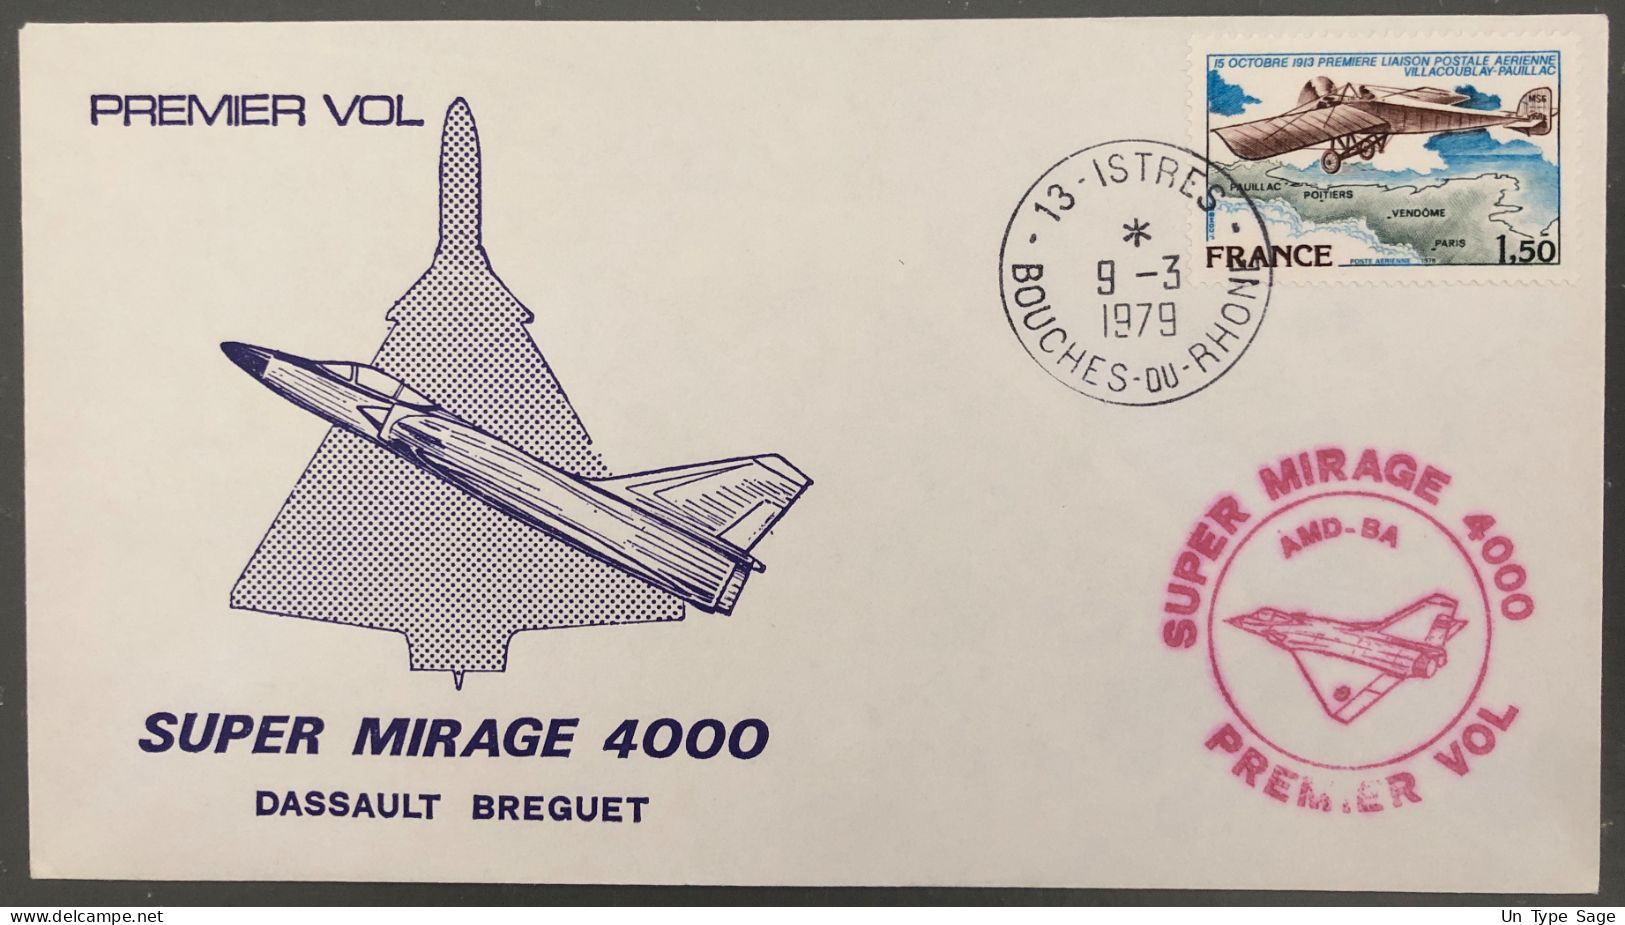 France, Premier Vol, SUPER MIRAGE 4000 - Enveloppe 9.3.1979 - (B1401) - First Flight Covers